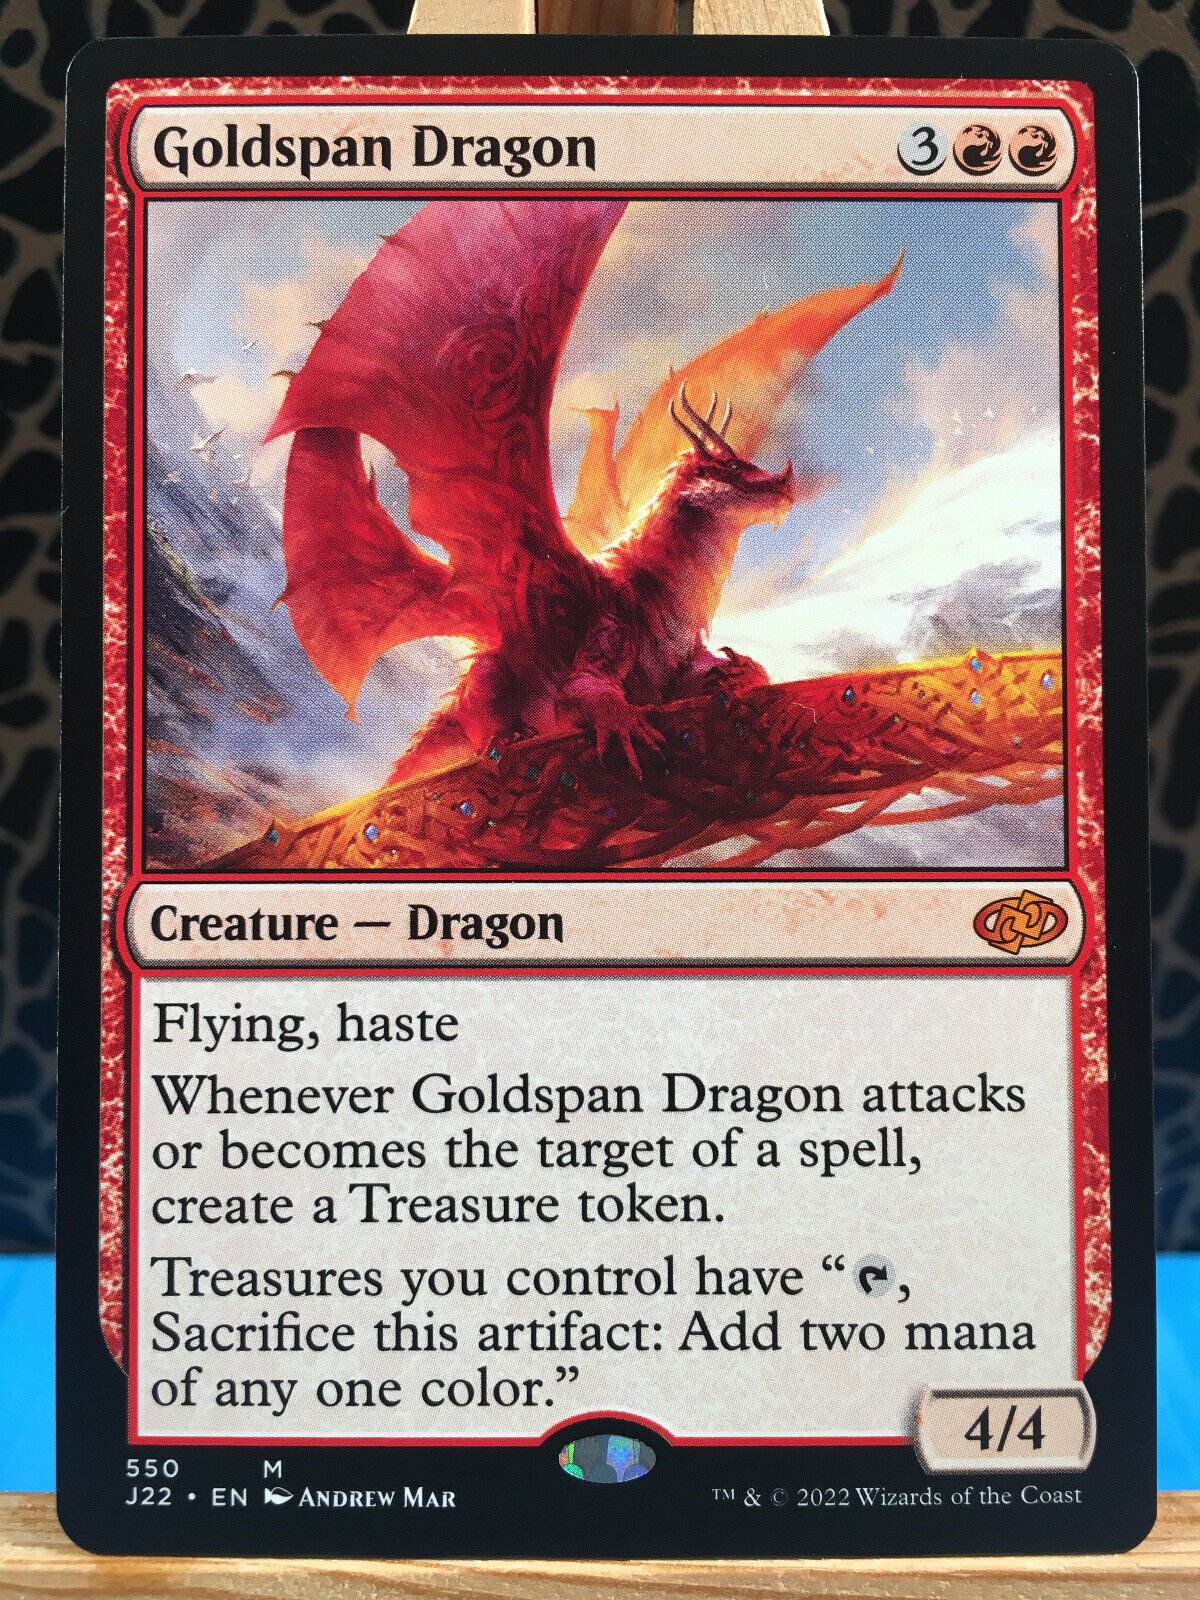 MTG - Goldspan Dragon. Jumpstart 2022. Red - Mythic Creature - Dragon.